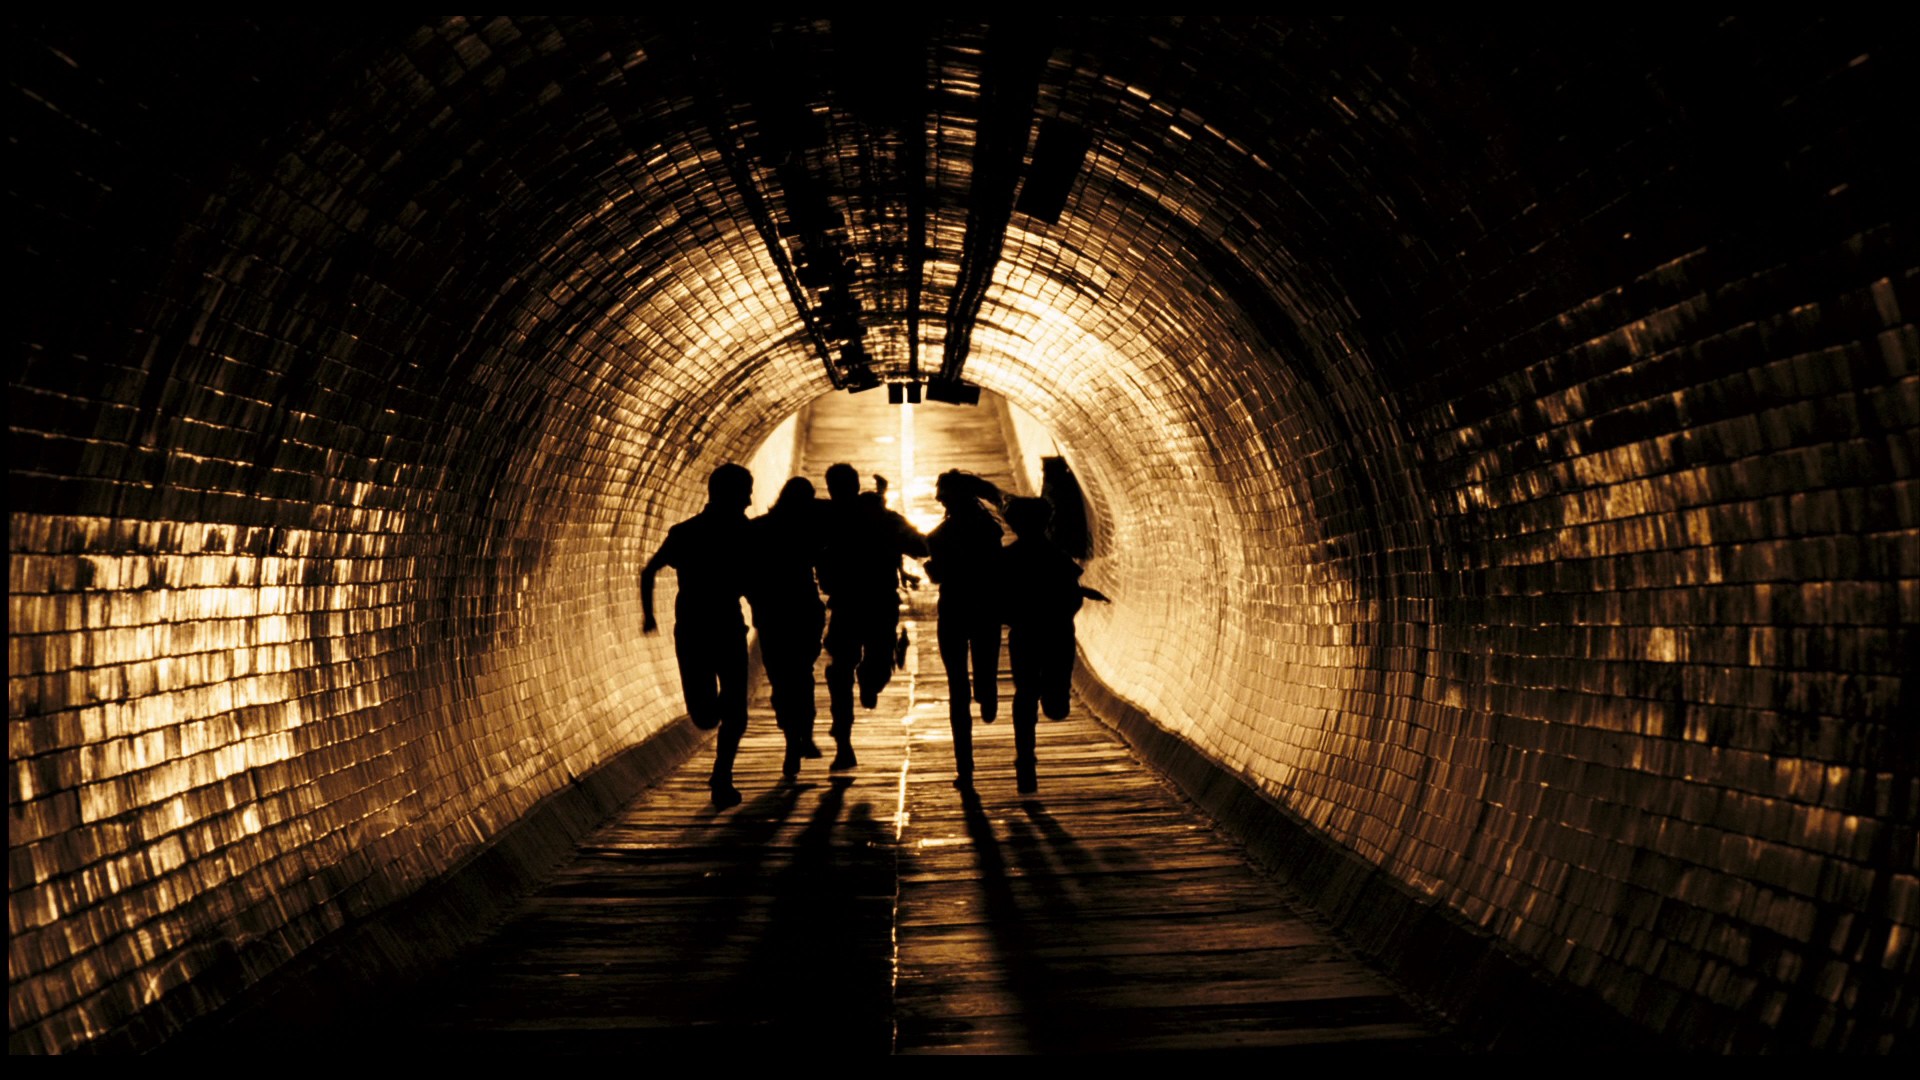 Movies 28 Weeks Later Horror Tunnel Brown Silhouette Running Movie Scenes Dark 1920x1080